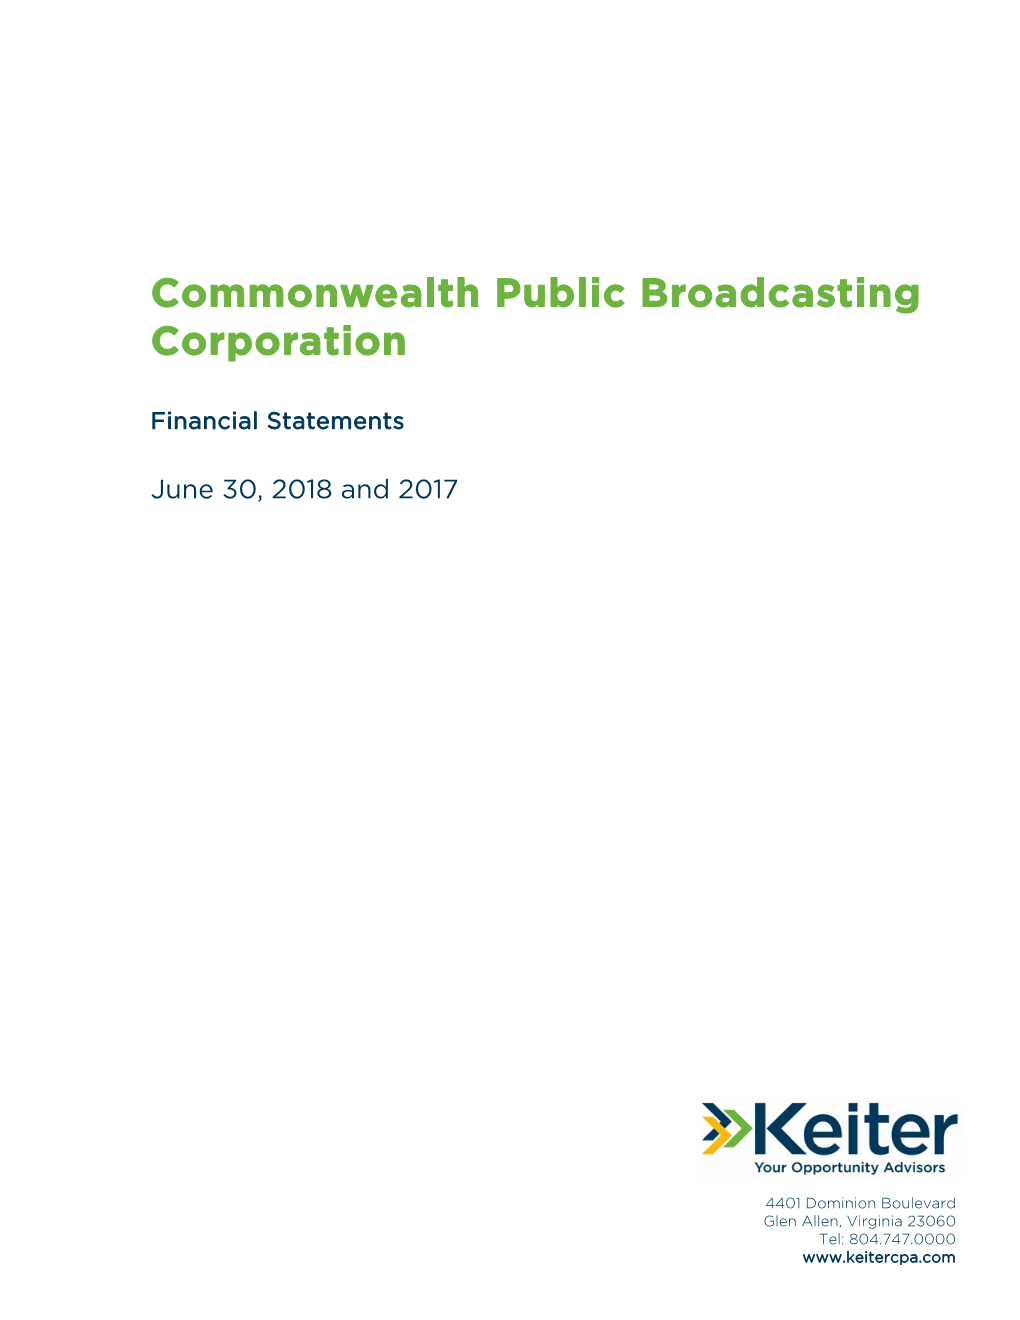 Commonwealth Public Broadcasting Corporation